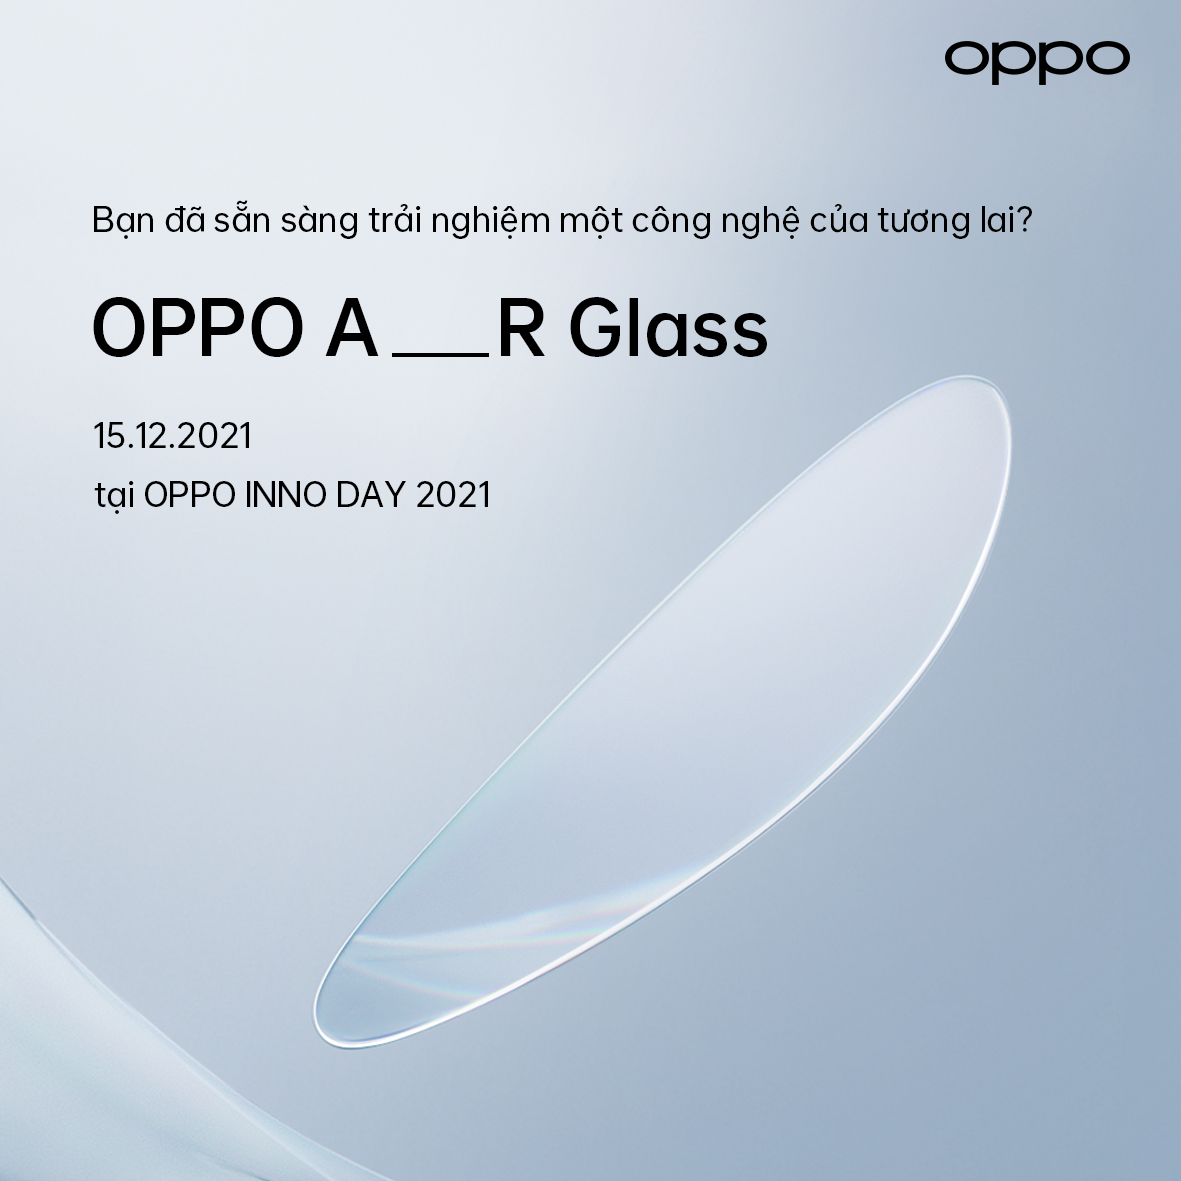 2. OPPO Air Glass